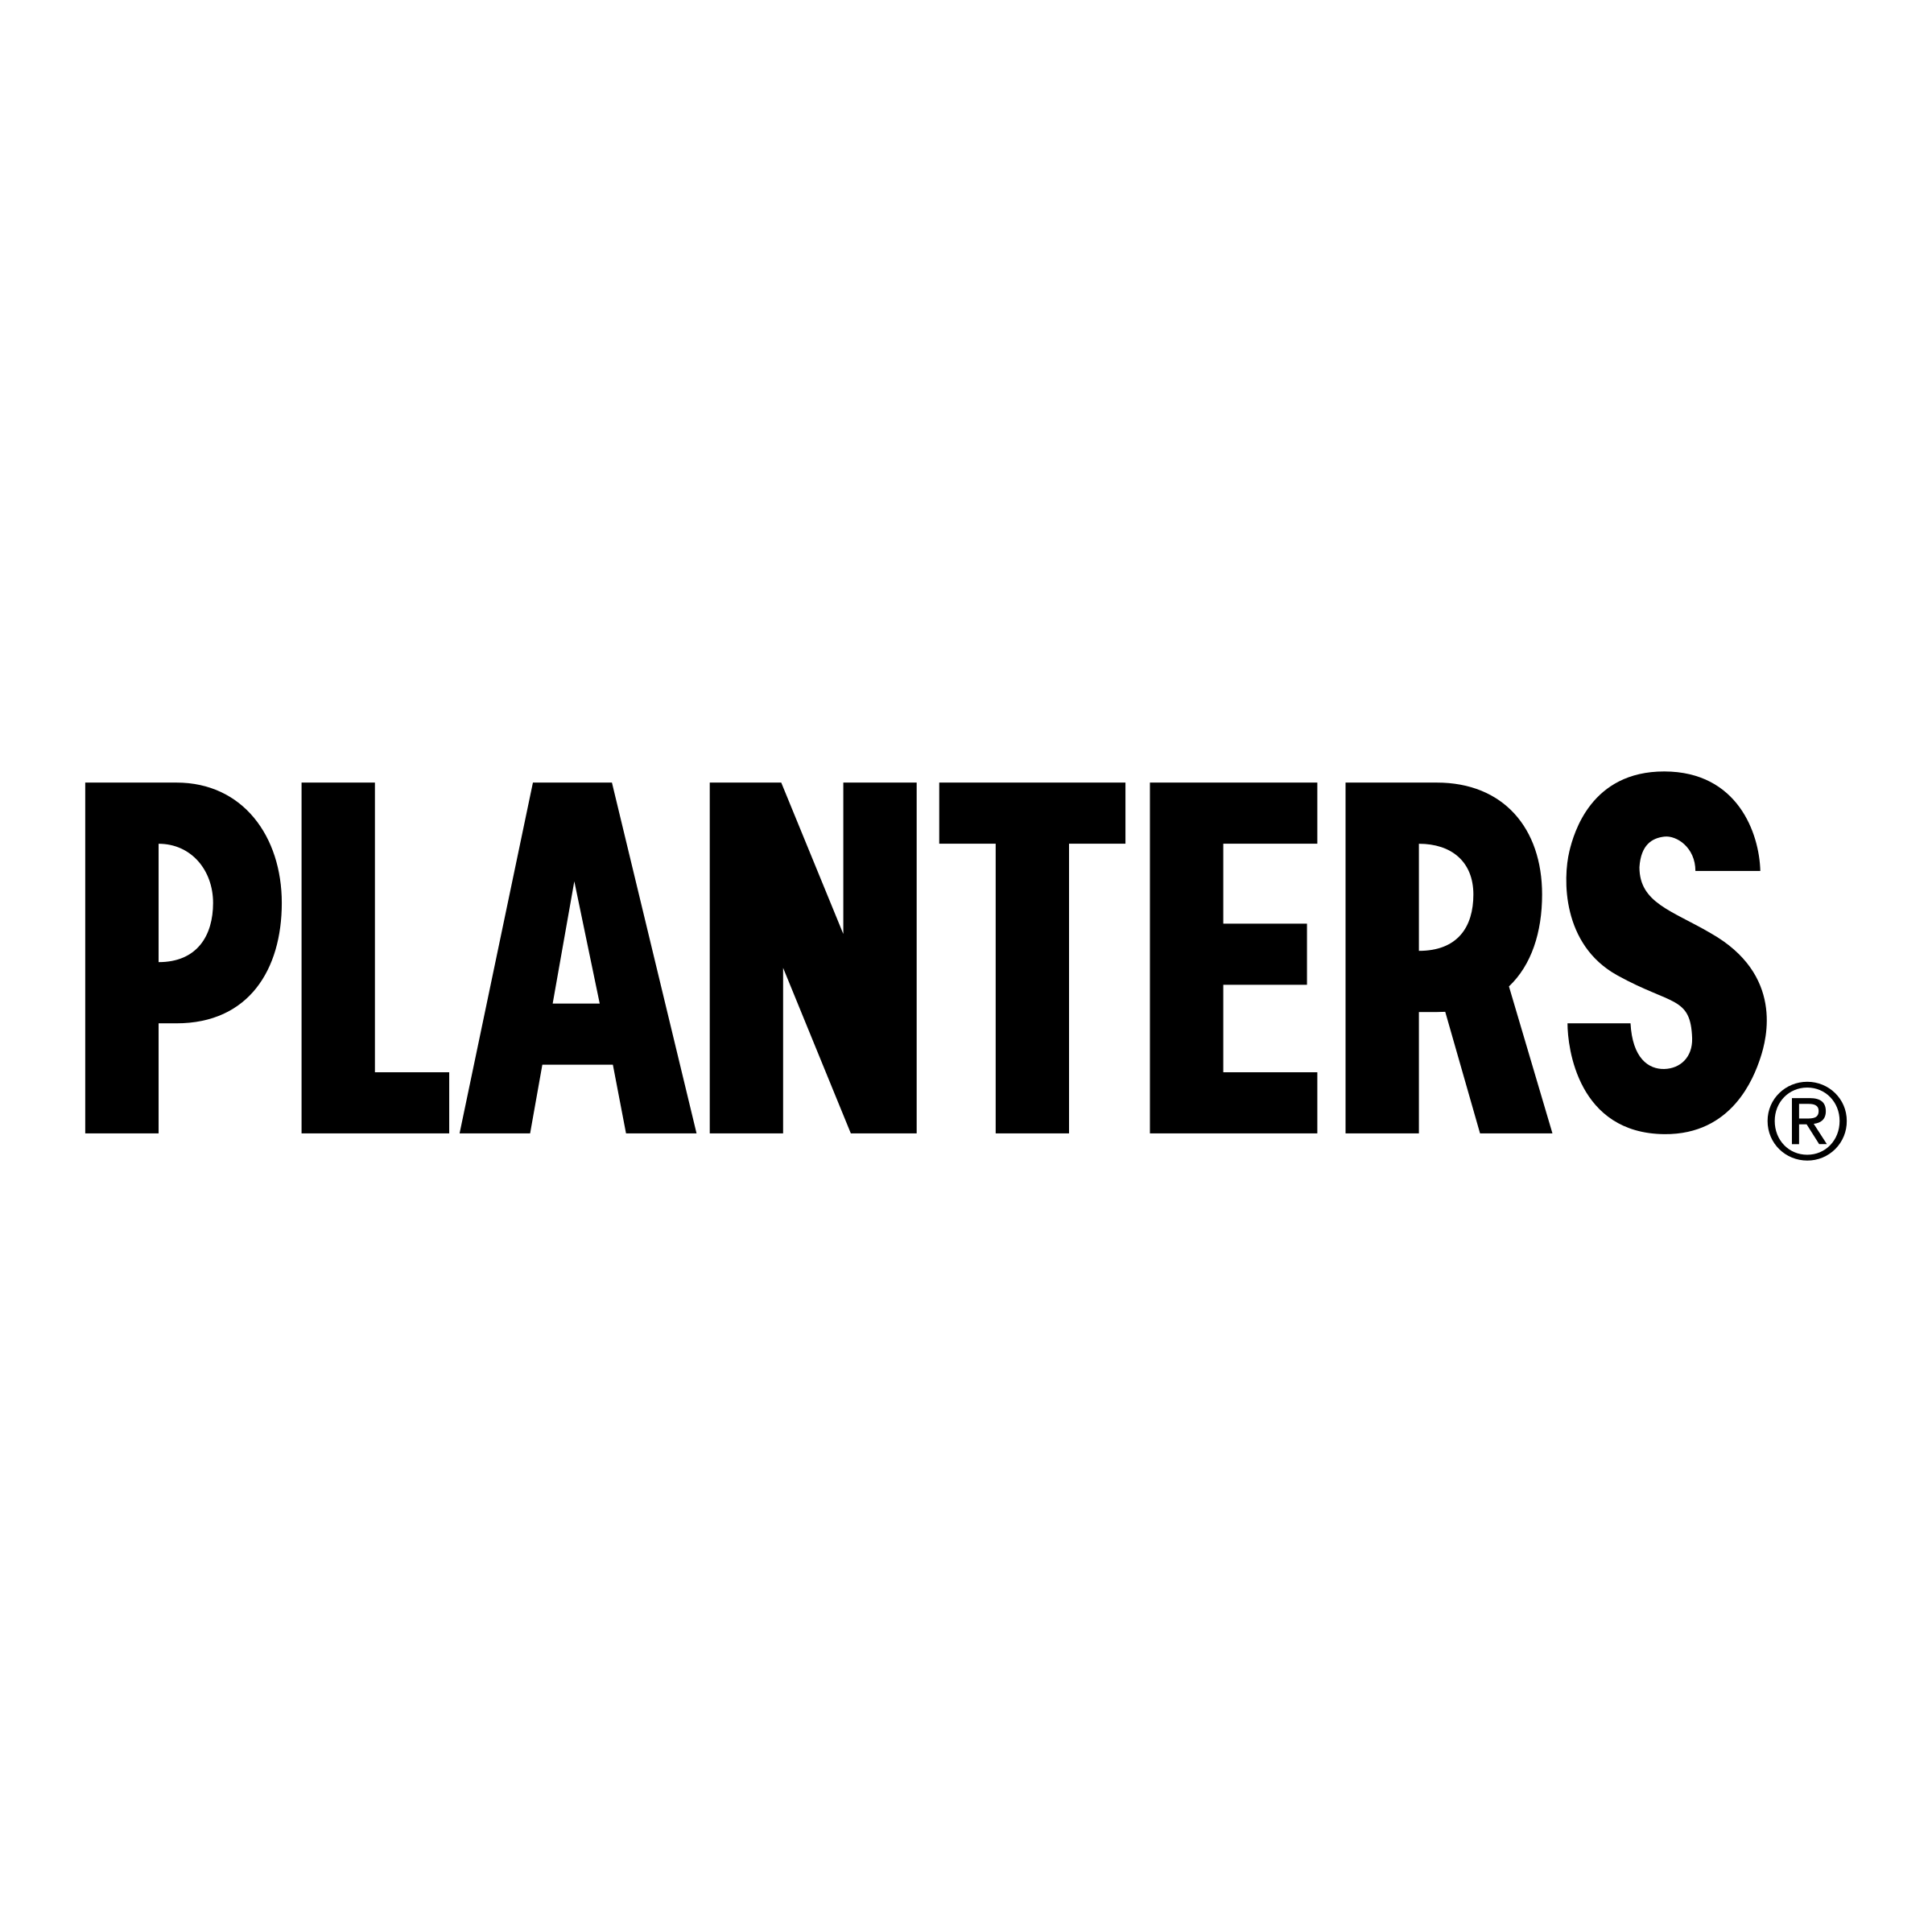 Planters Logo - Planters Logo PNG Transparent & SVG Vector - Freebie Supply